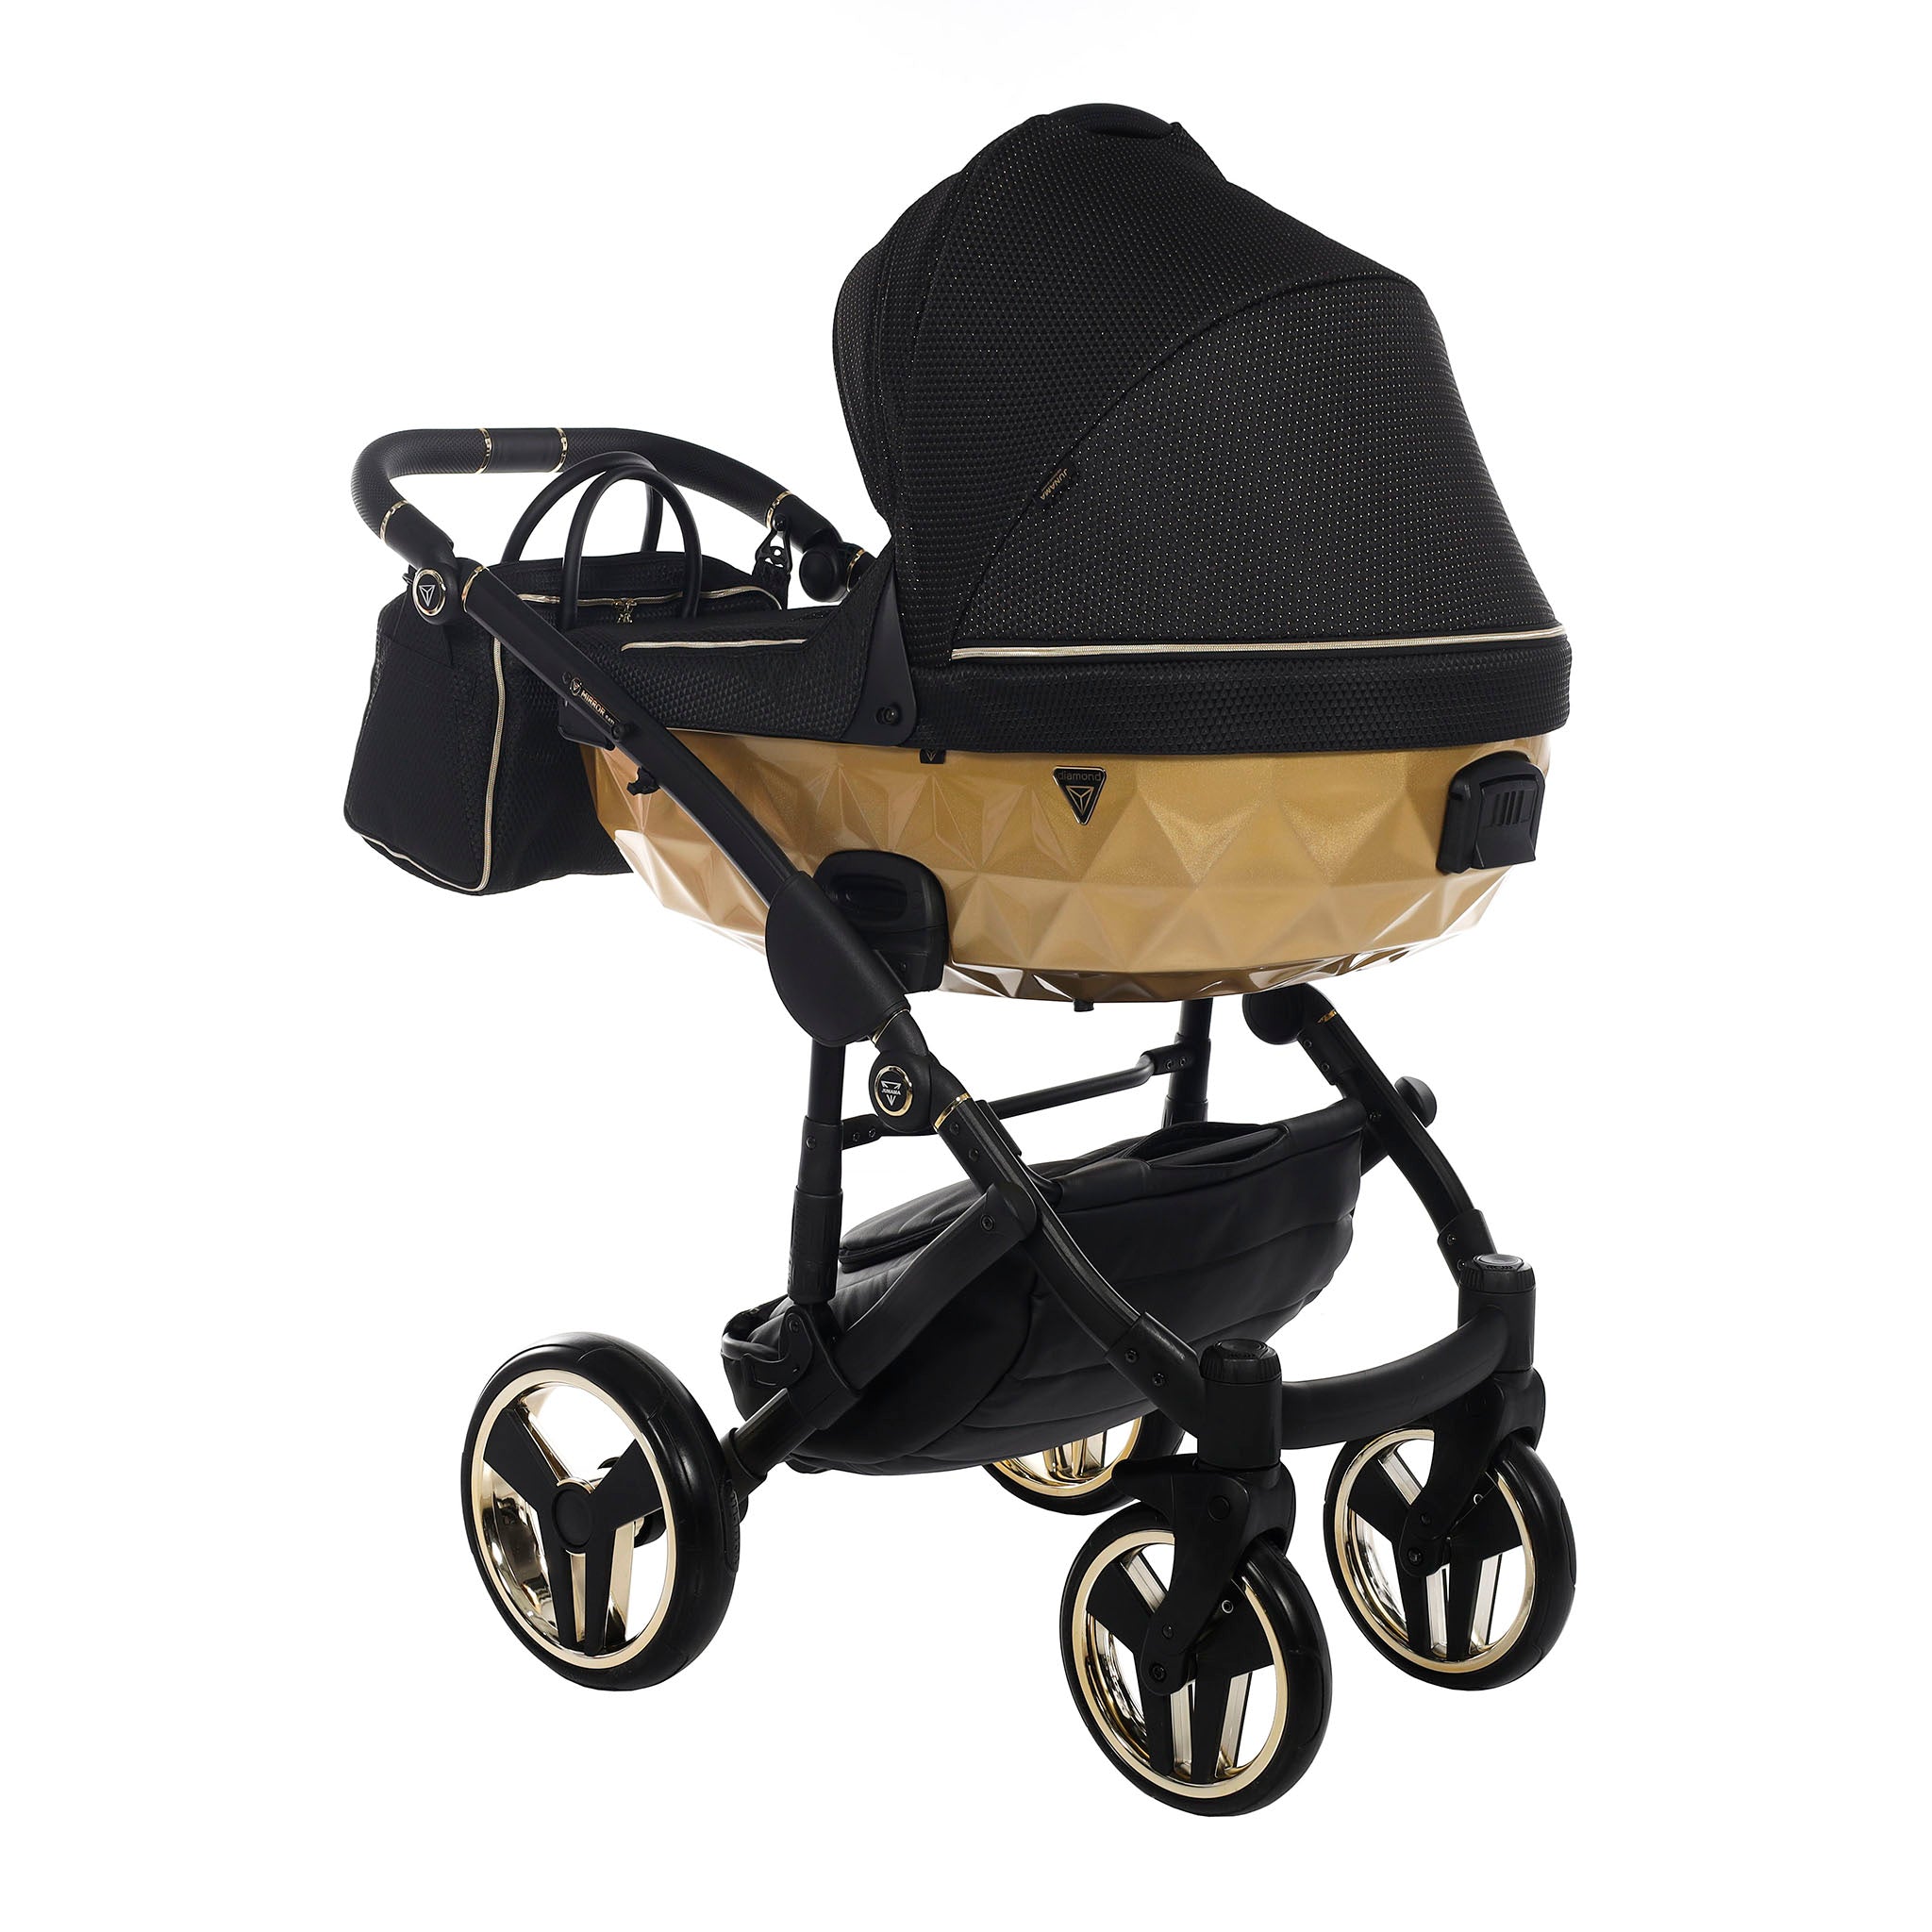 Junama Mirror Satin, baby prams or stroller 2 in 1 - Gold and Black, Code number: JUNMSAT03